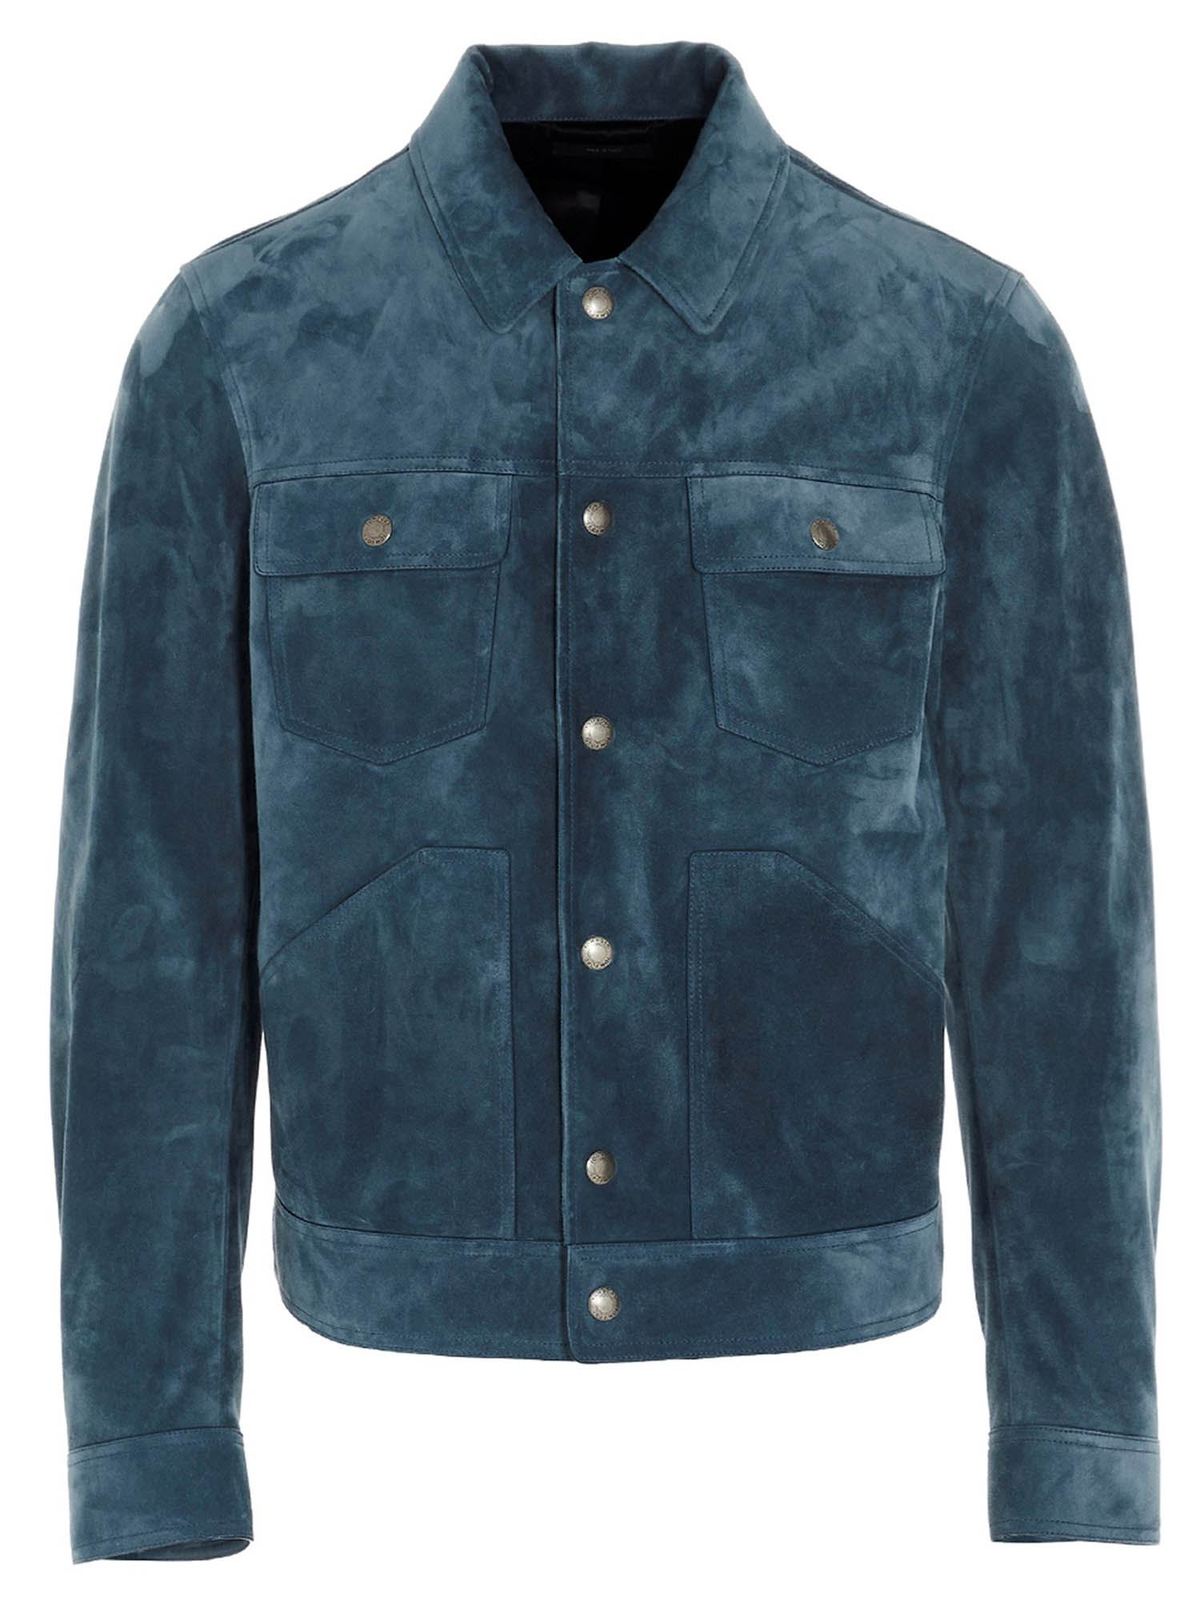 Leather jacket Tom Ford - Western Jacket in Denim Blue - BW417TFL754B15